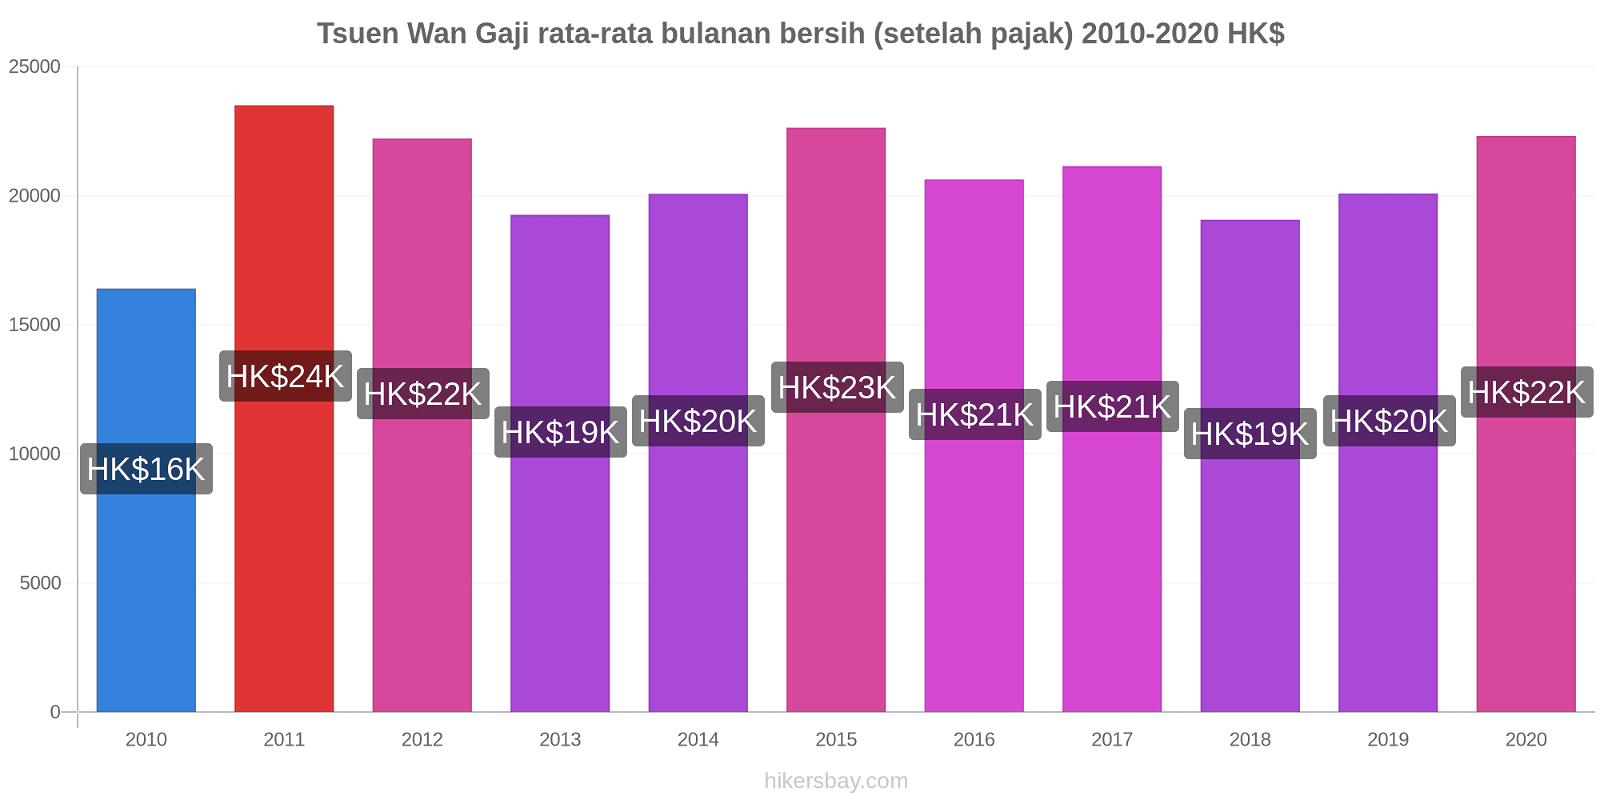 Tsuen Wan perubahan harga Gaji rata-rata bulanan bersih (setelah pajak) hikersbay.com